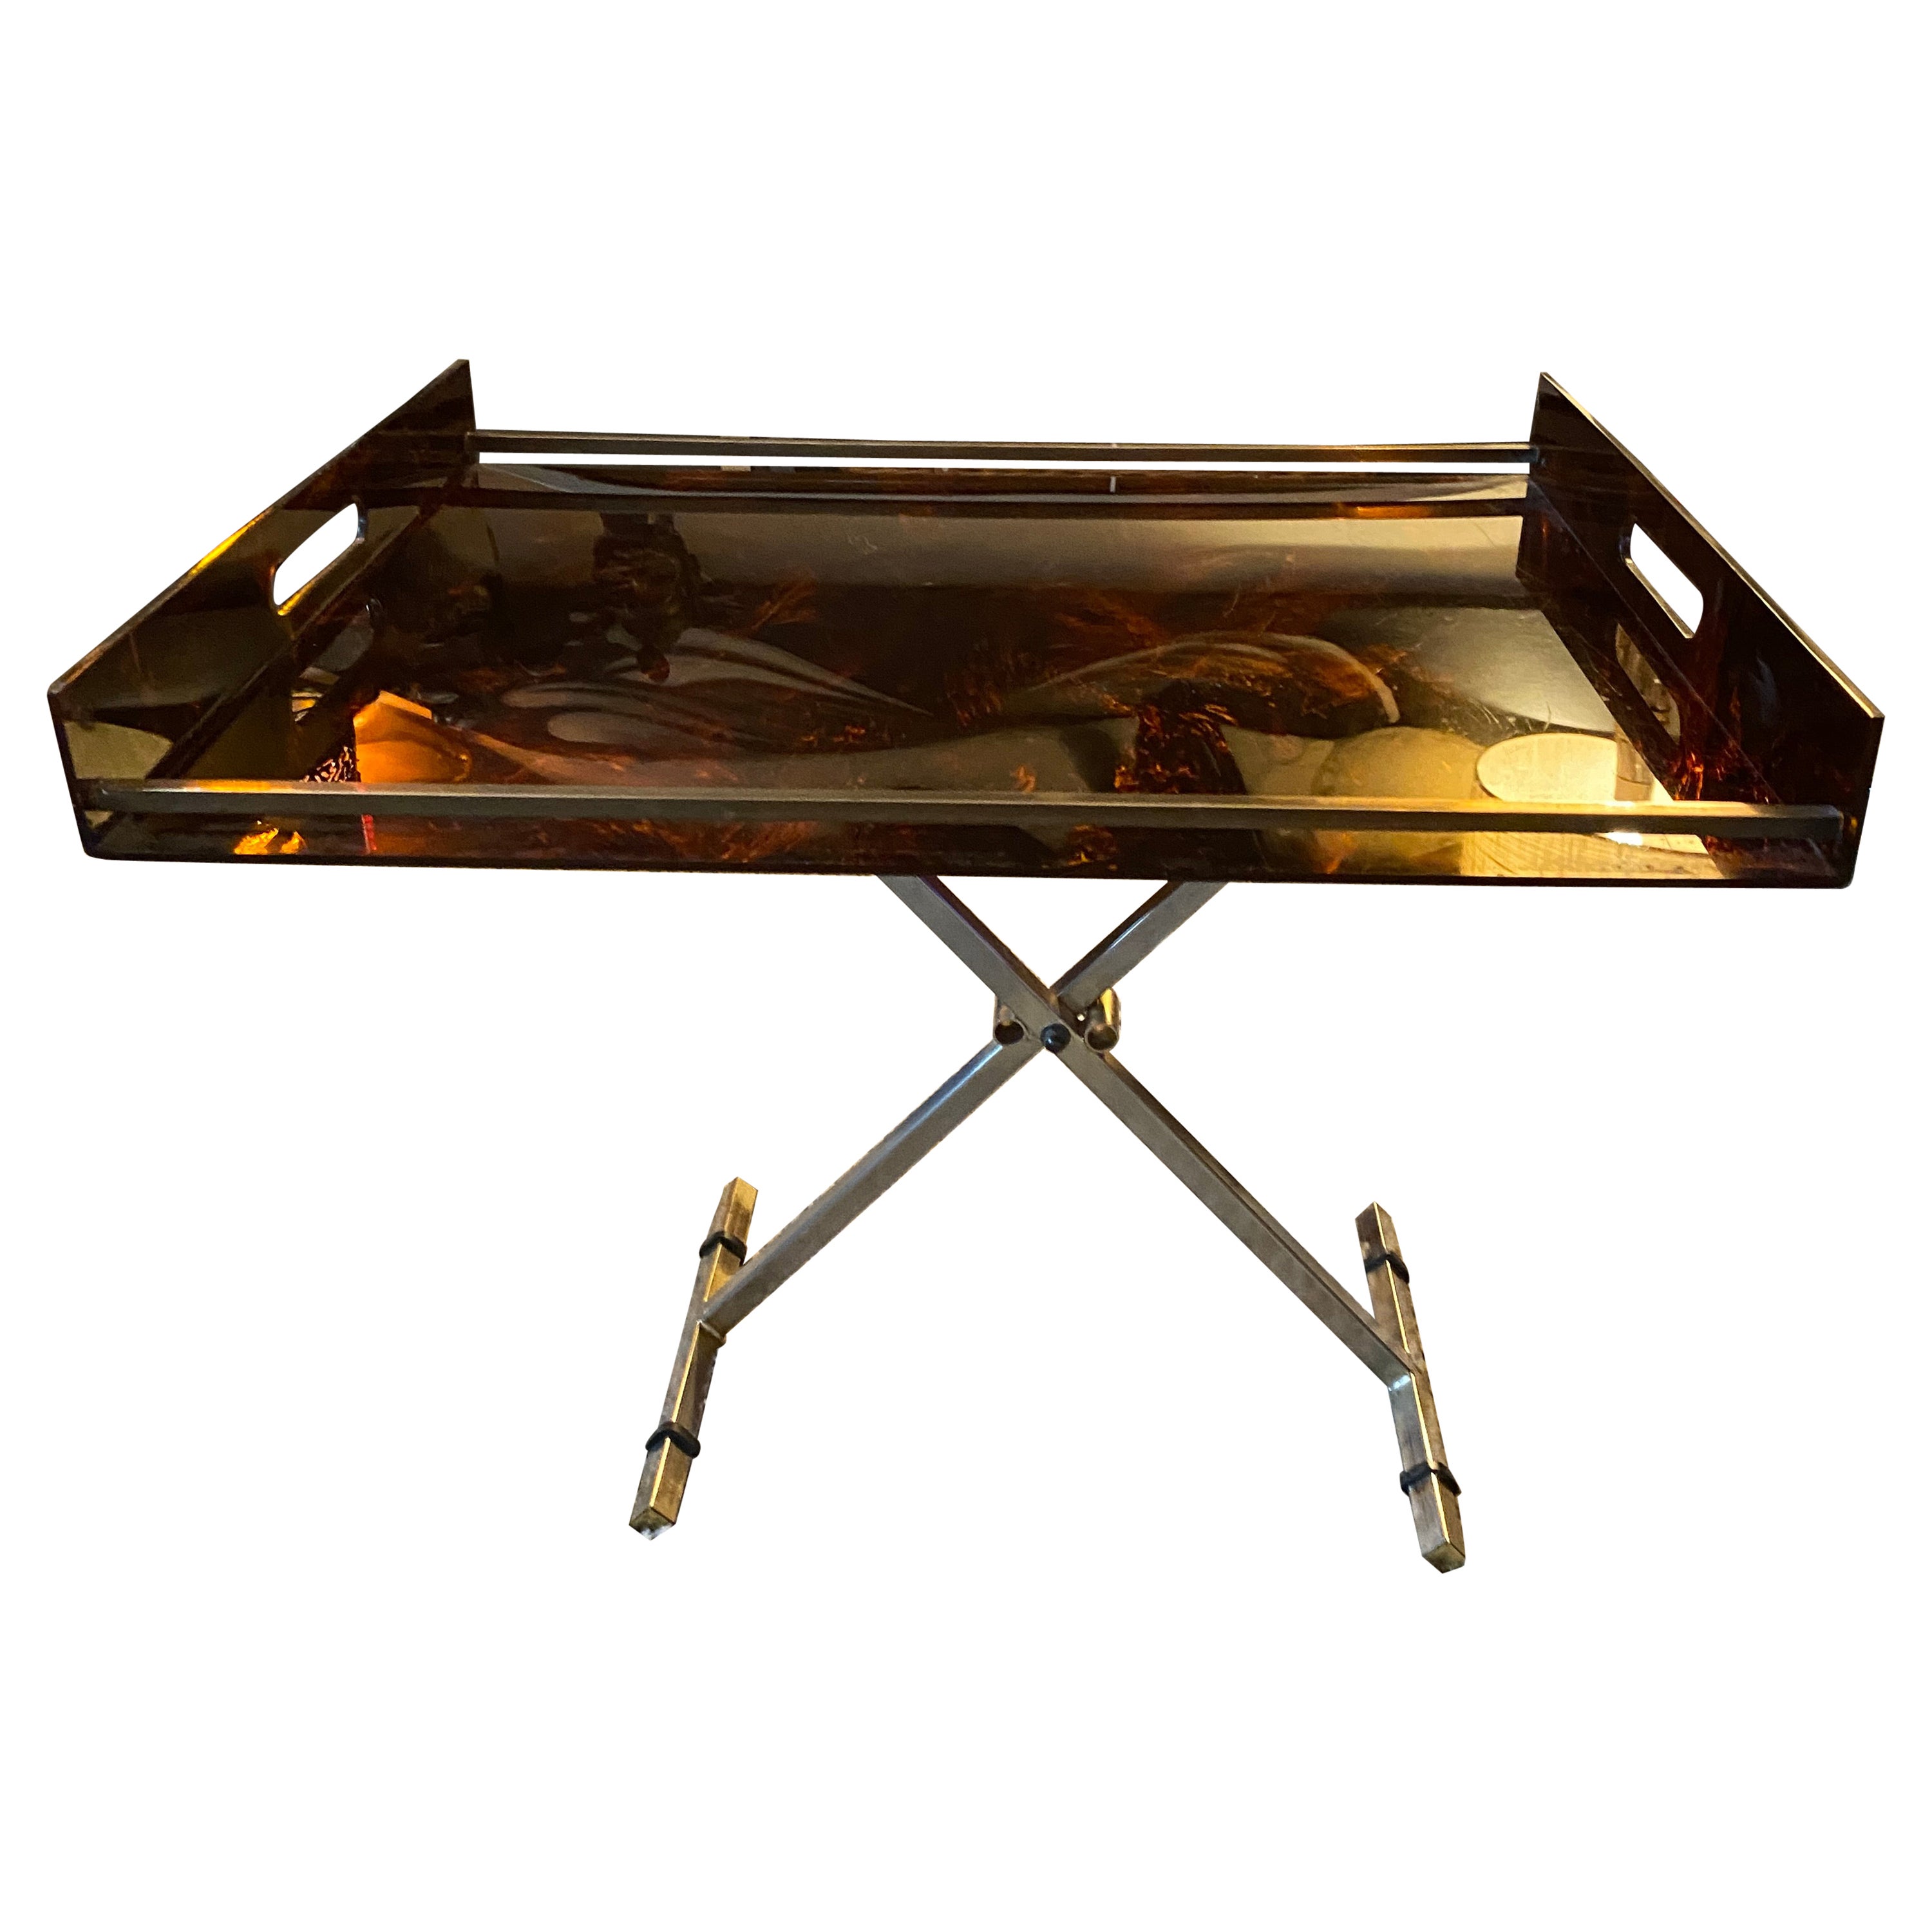 Maison Mercier Paris folding table in tortoise shell lucite and brass, 1970 For Sale